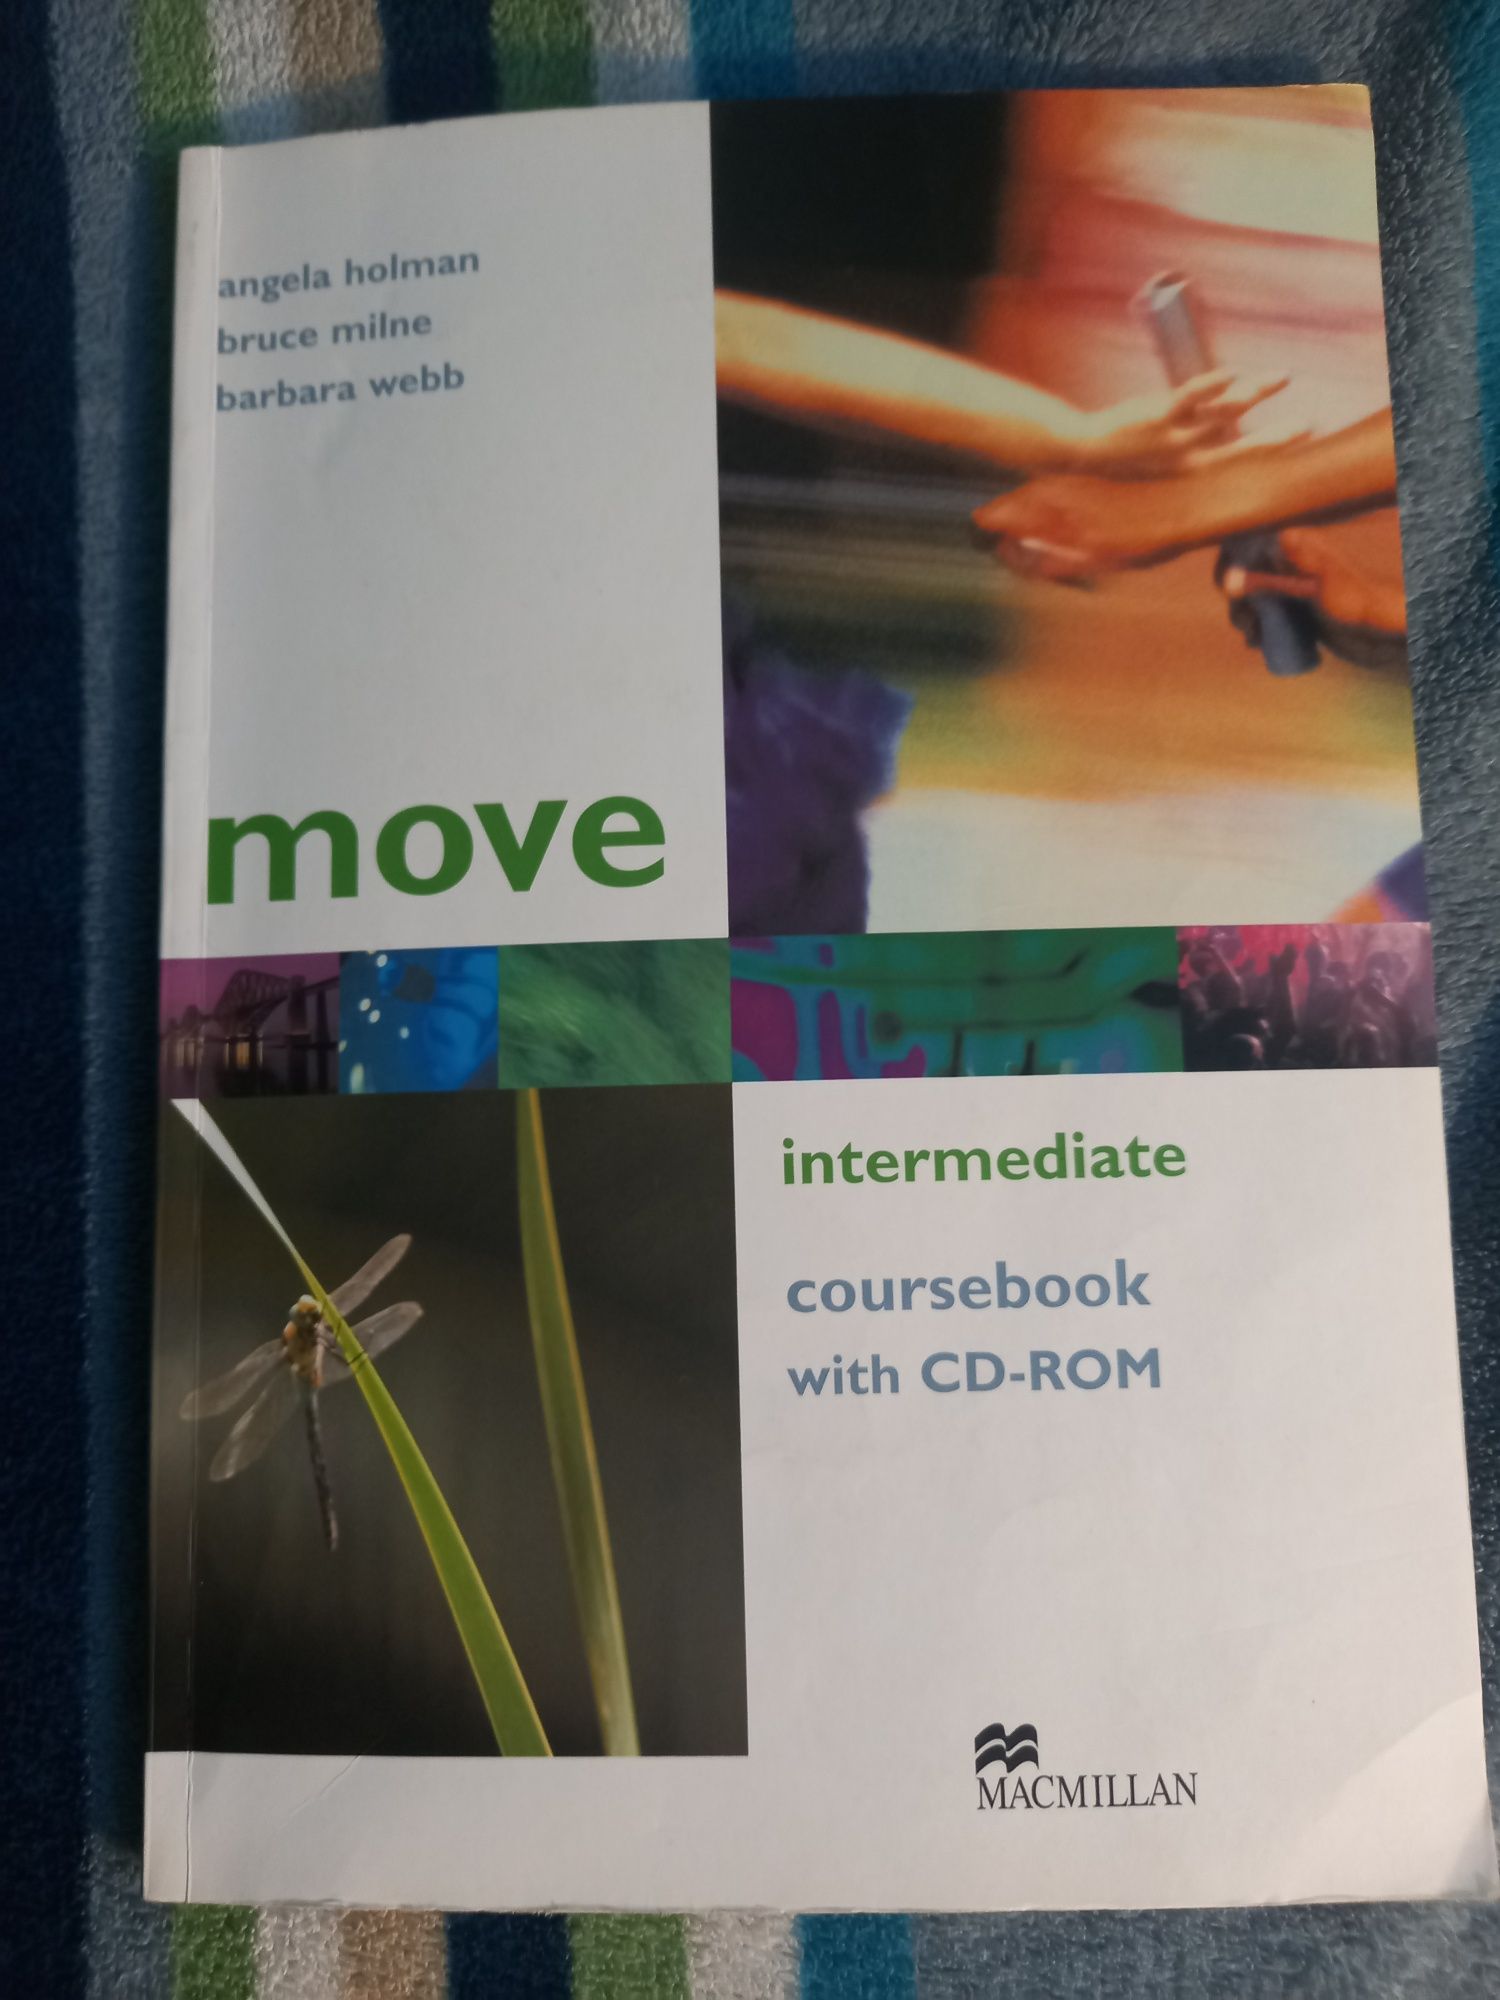 Move intermediate coursebook with CD-ROM